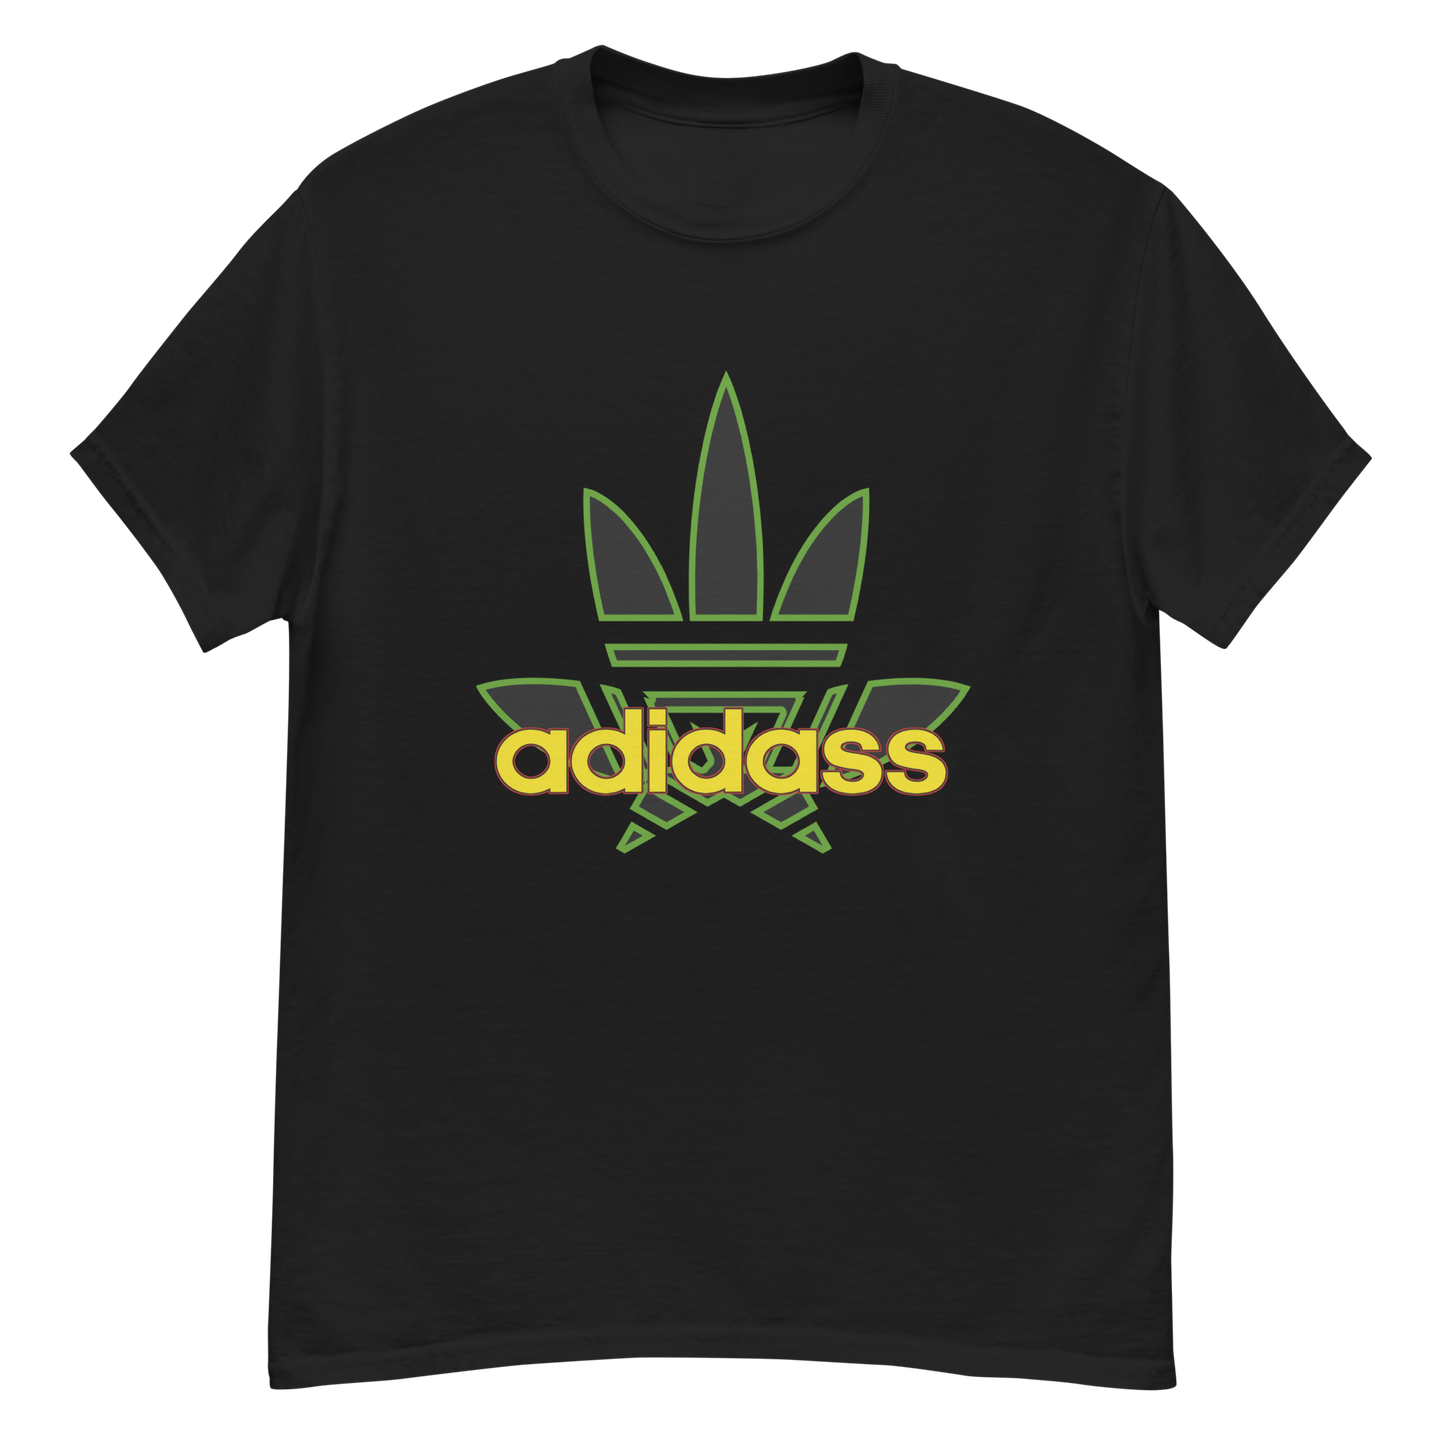 Adidass Shirt